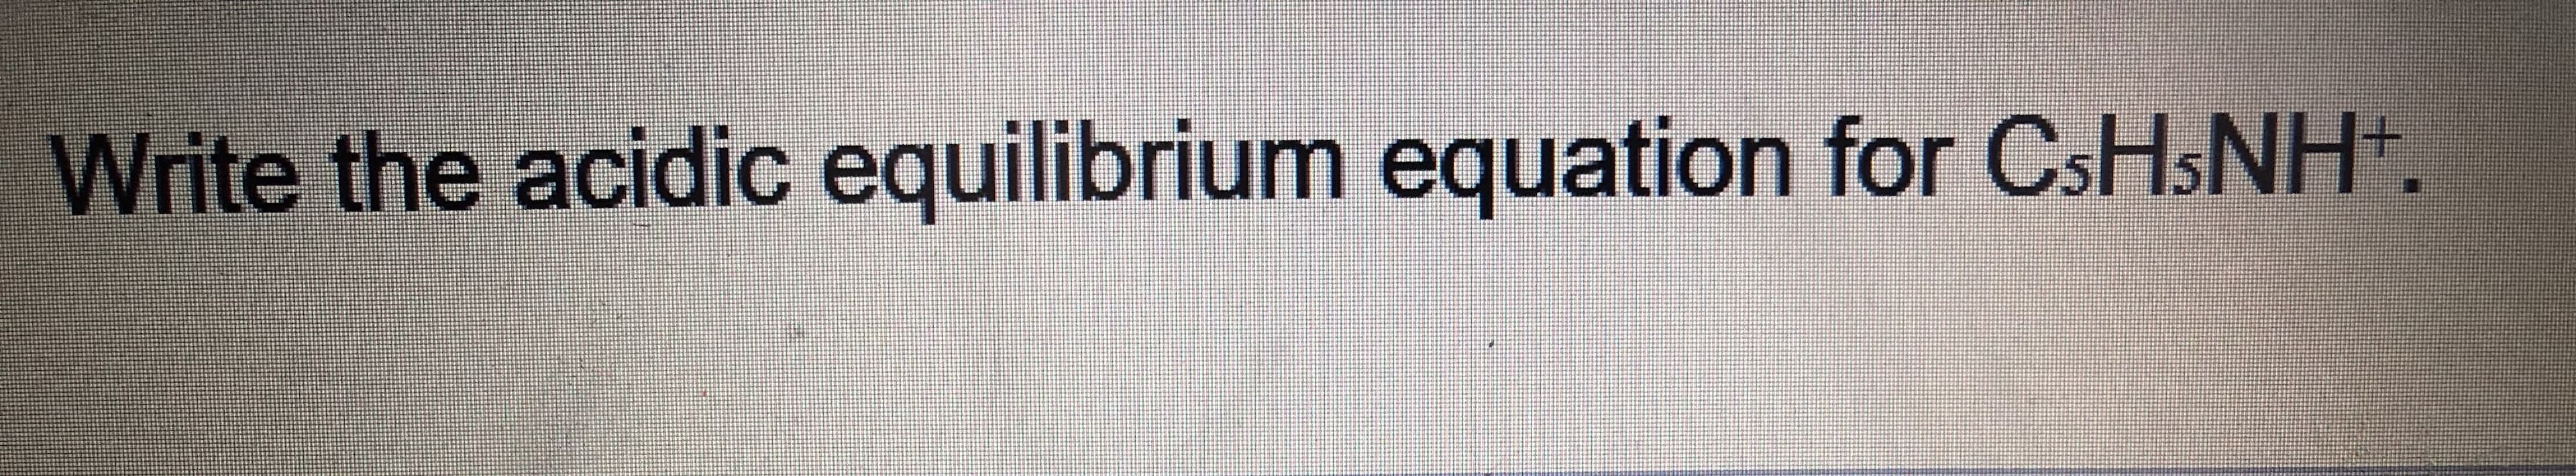 Write the acidic equilibrium equation for CSHSNH.
